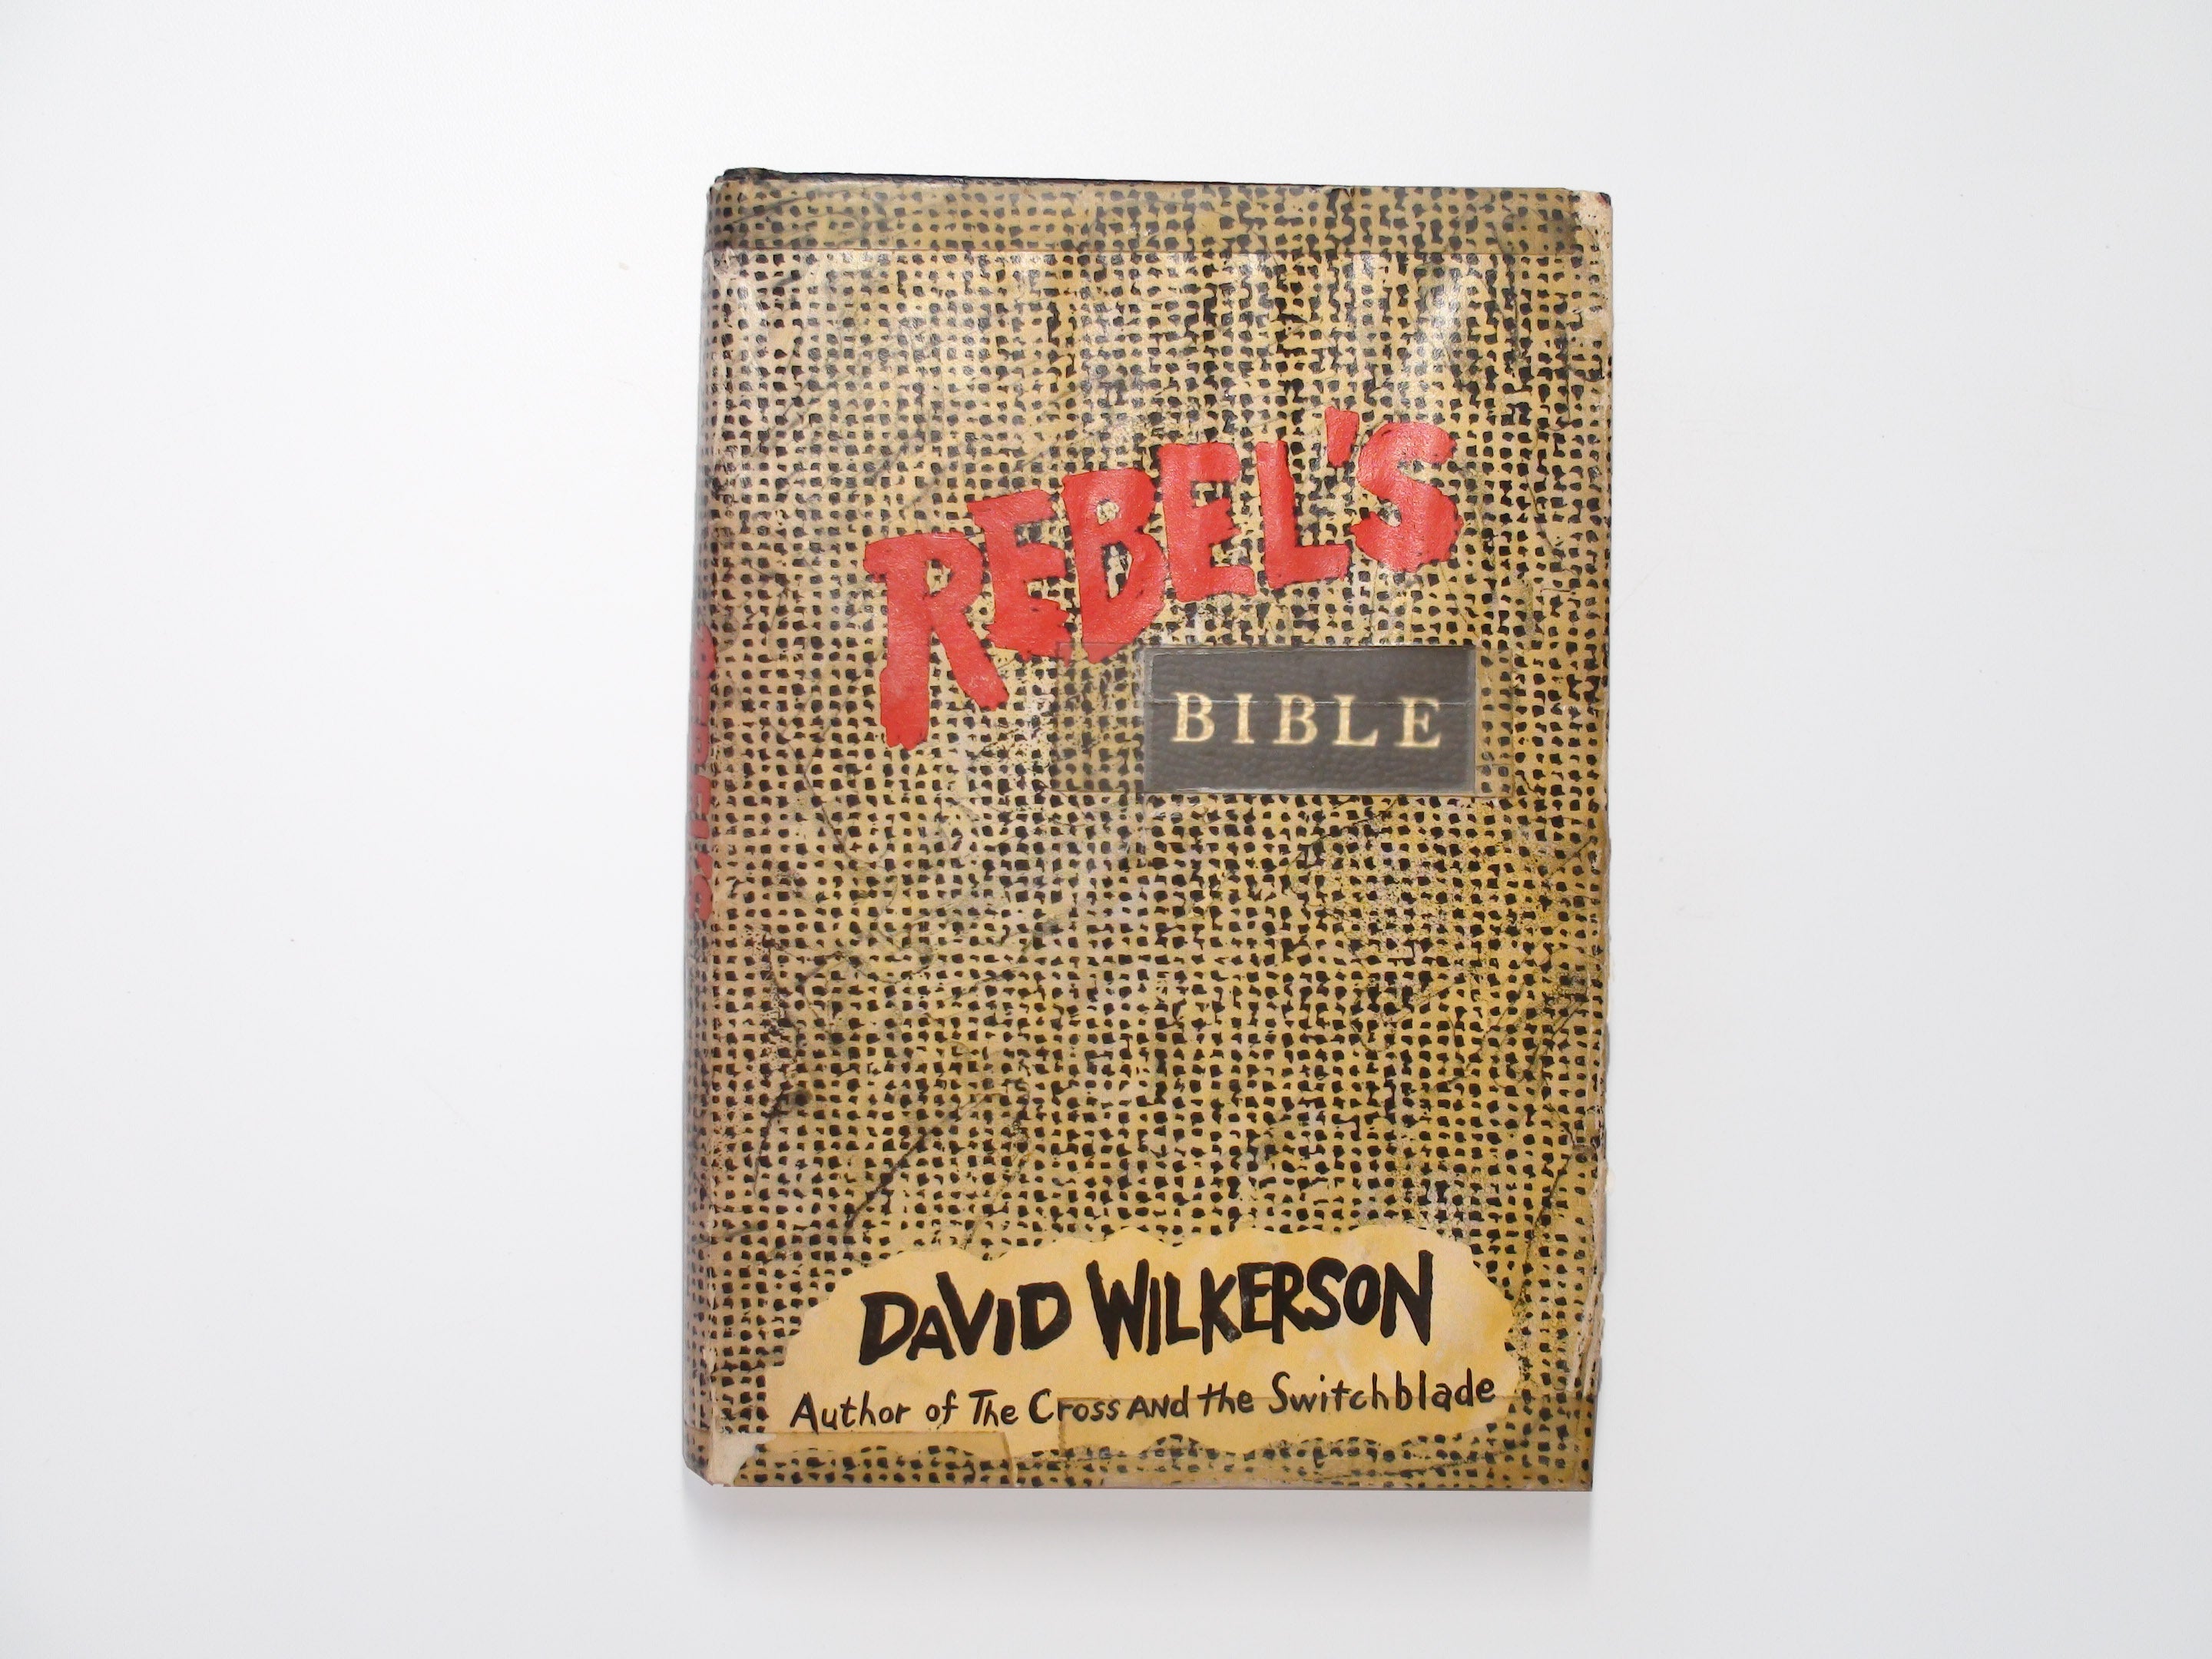 Rebel's Bible, David Wilkenson, with DJ, 1st Ed., 1970